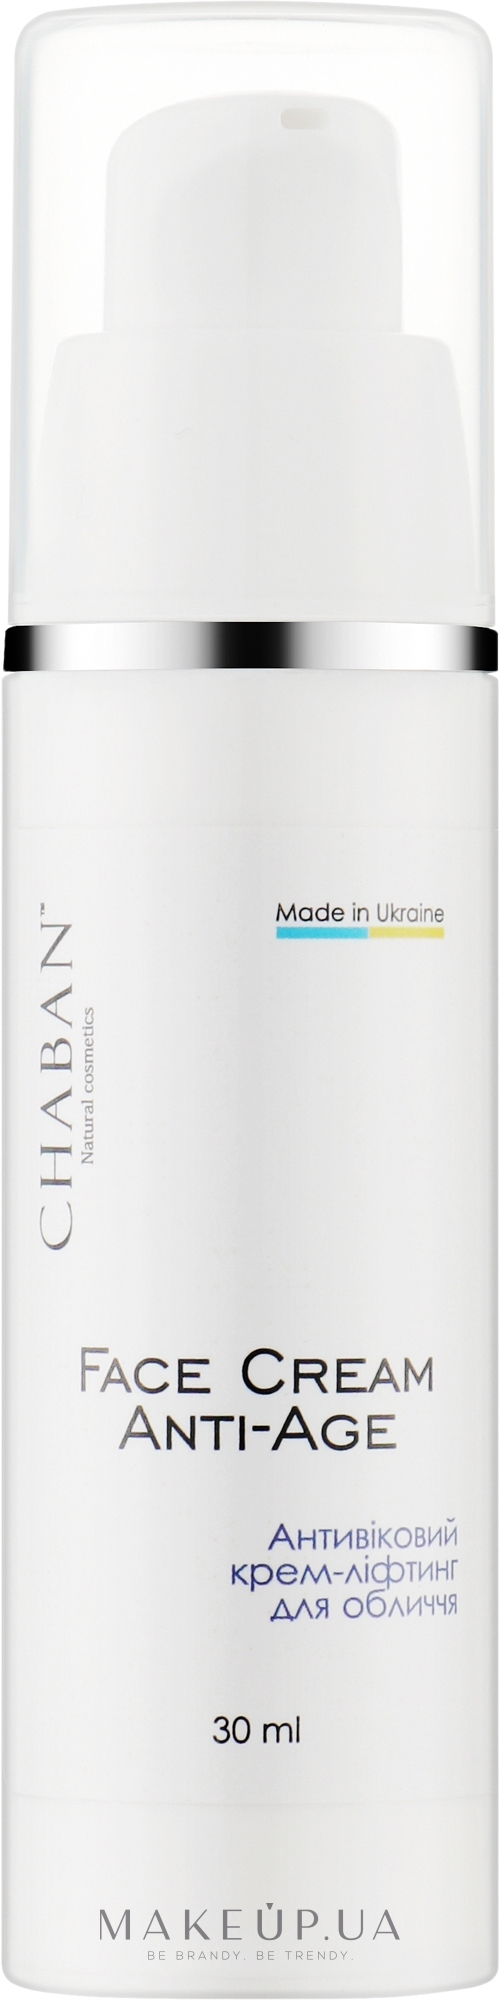 Антивозрастной крем-лифтинг для лица - Chaban Natural Cosmetics Face Cream Anti-Age — фото 30ml